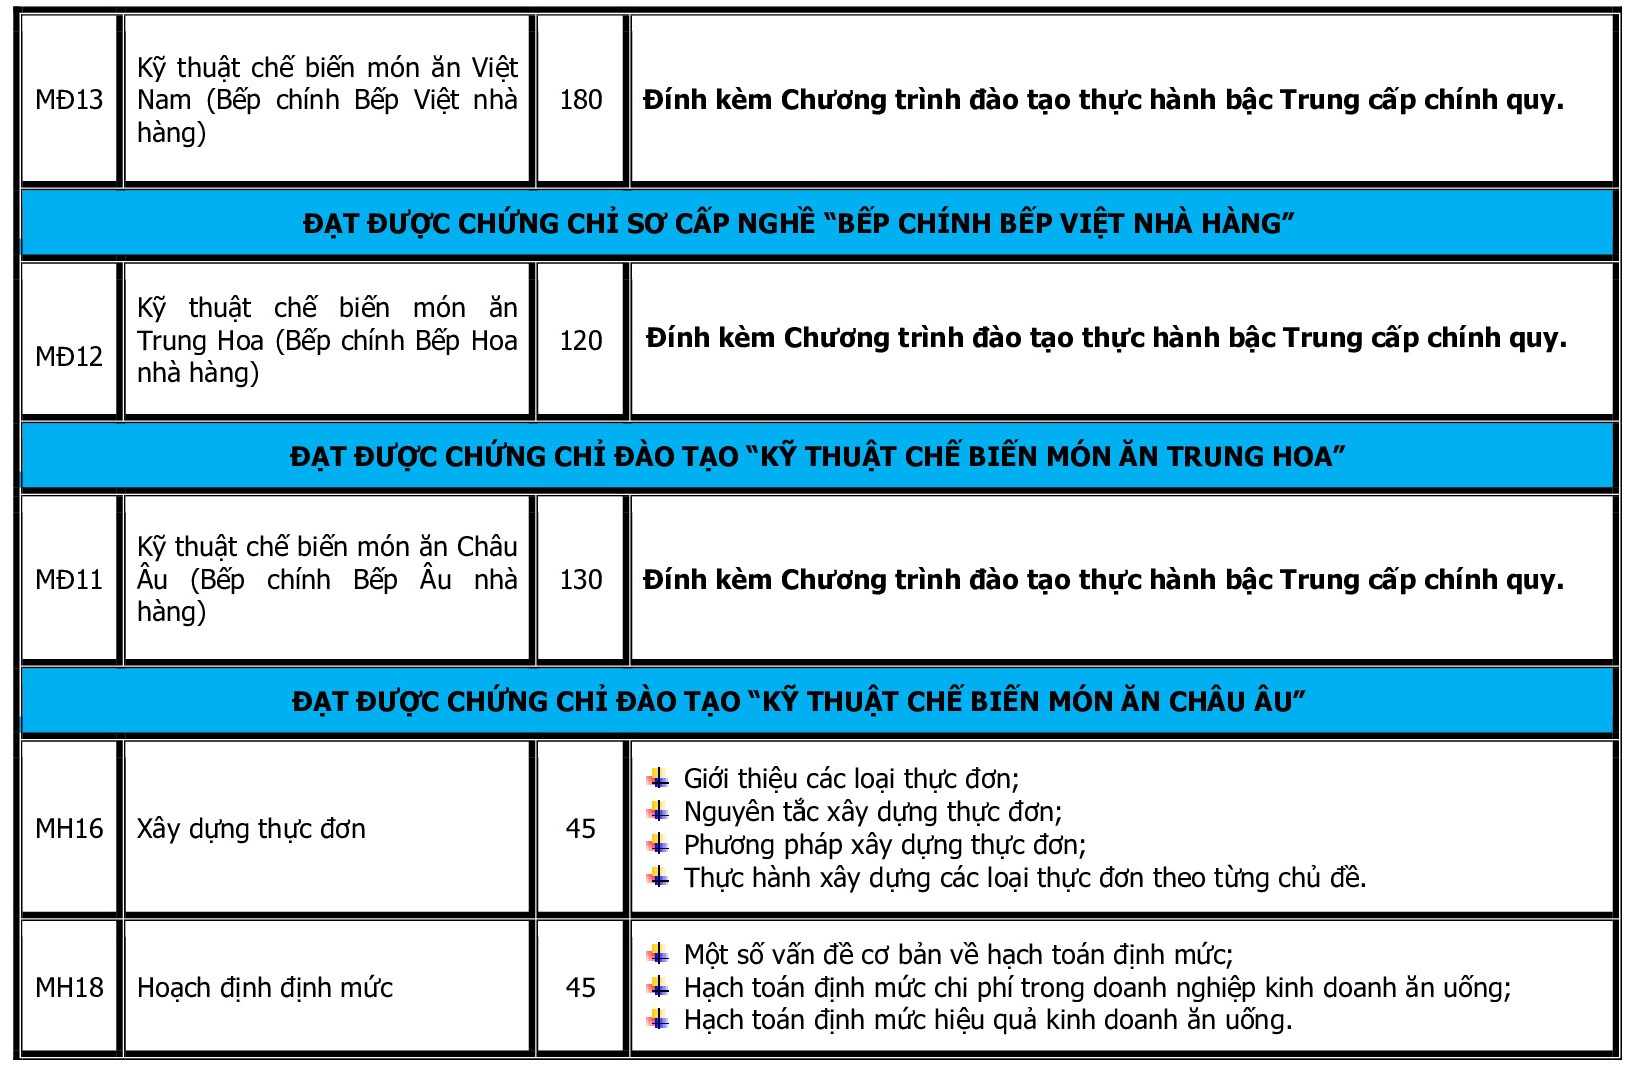 CHUONG TRINH TRUNG CAP - KTCBMA 2020_p003